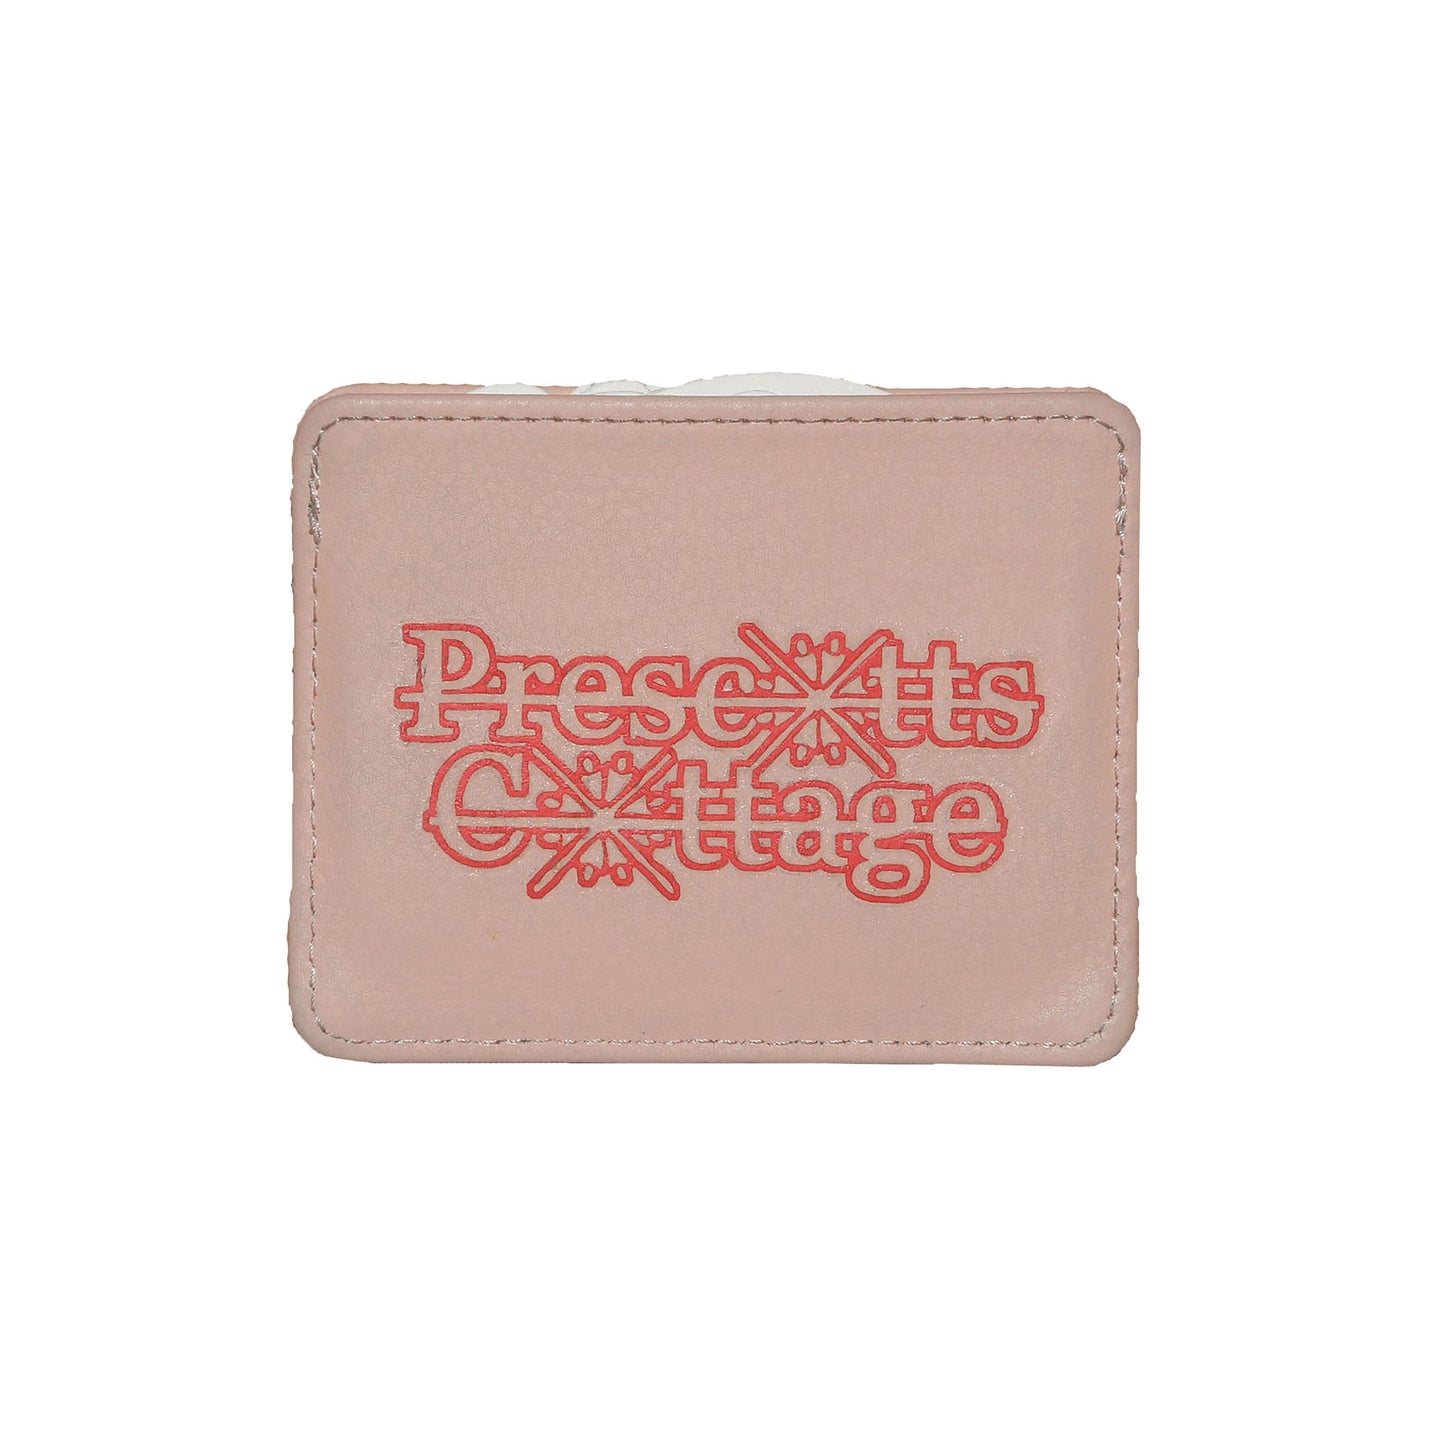 Prescotts Cottage Wallet Sticker Pack